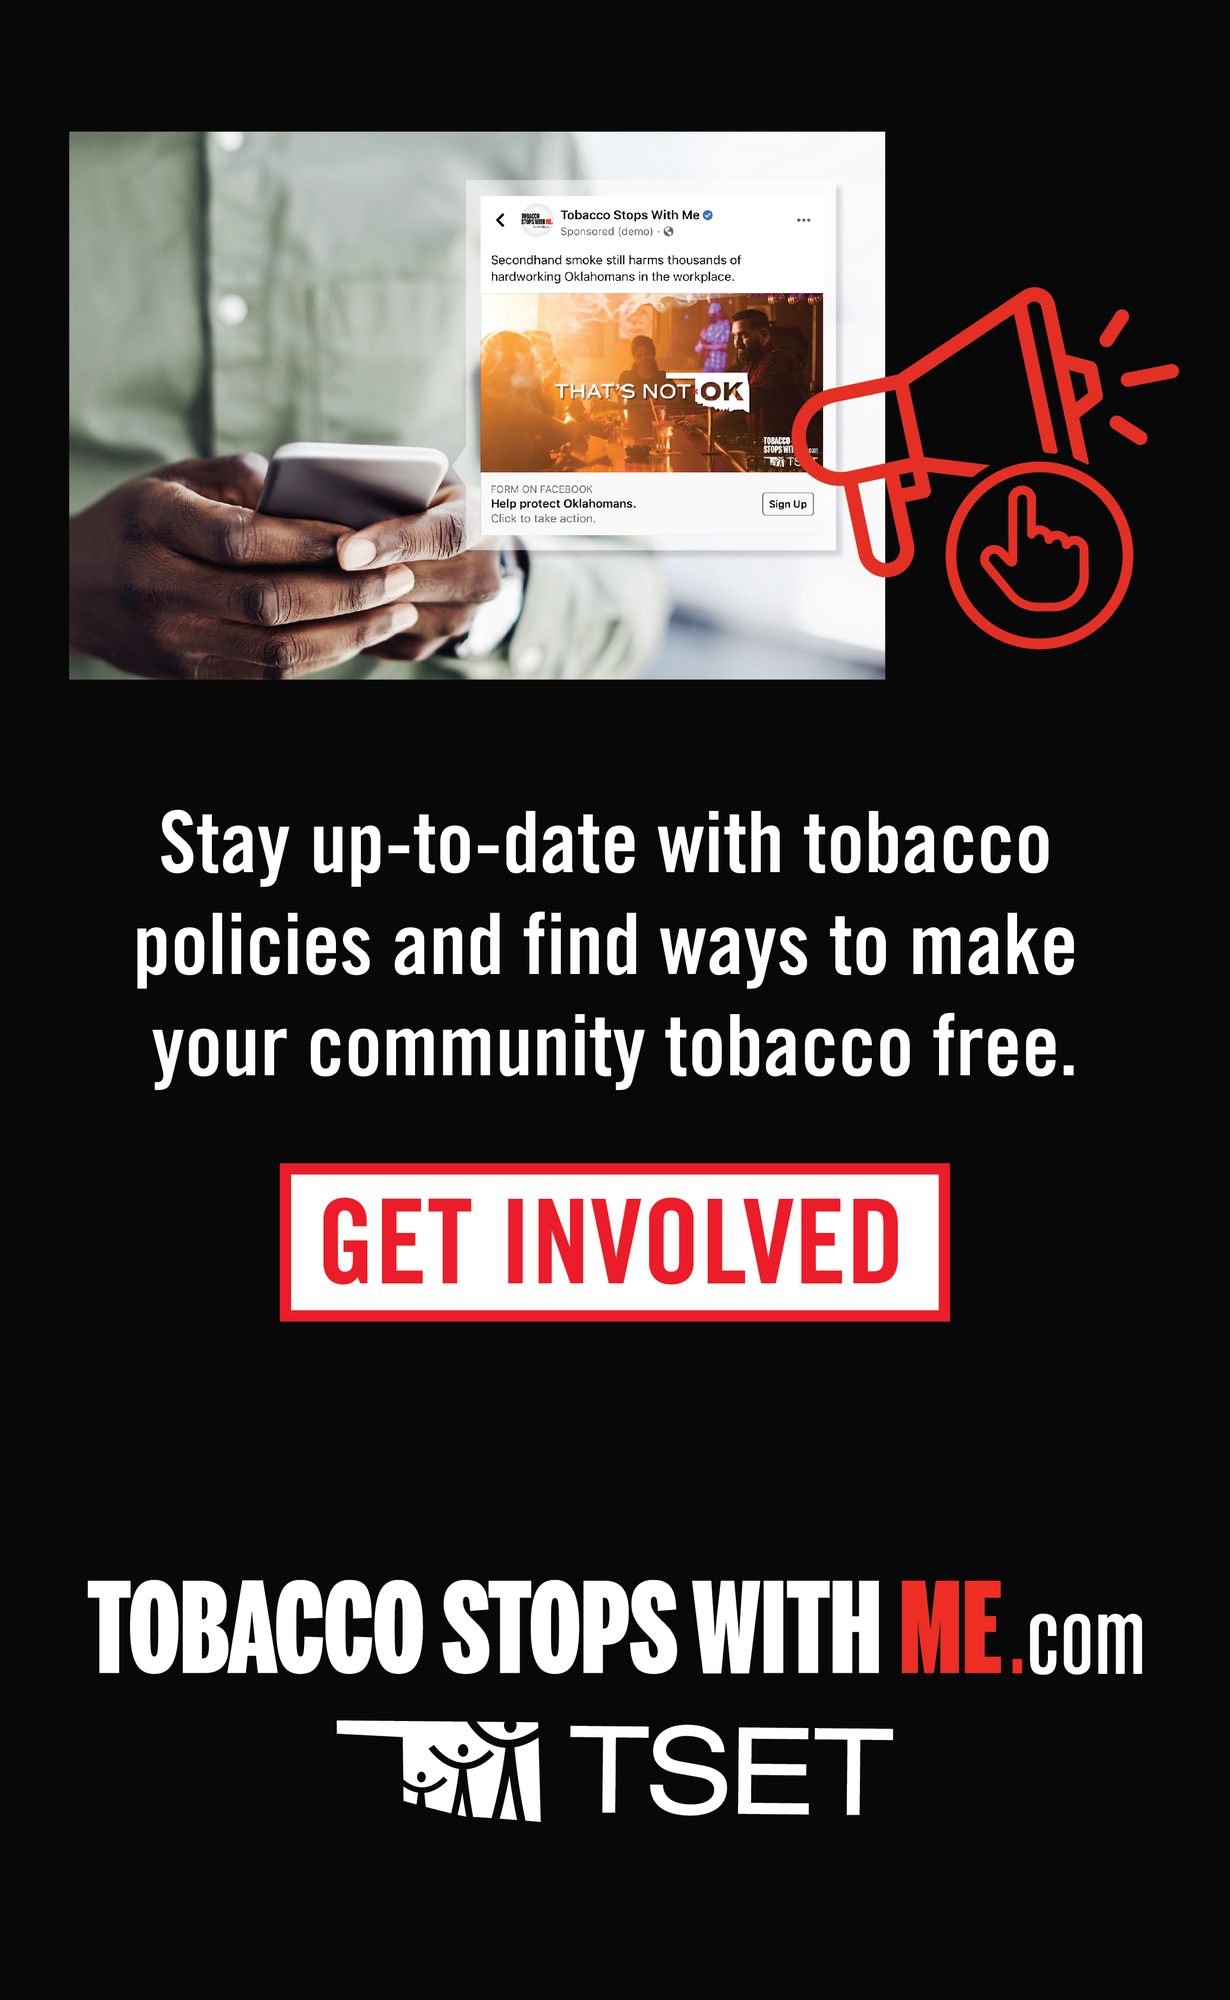 Get involved at TobaccoStopsWithMe.com